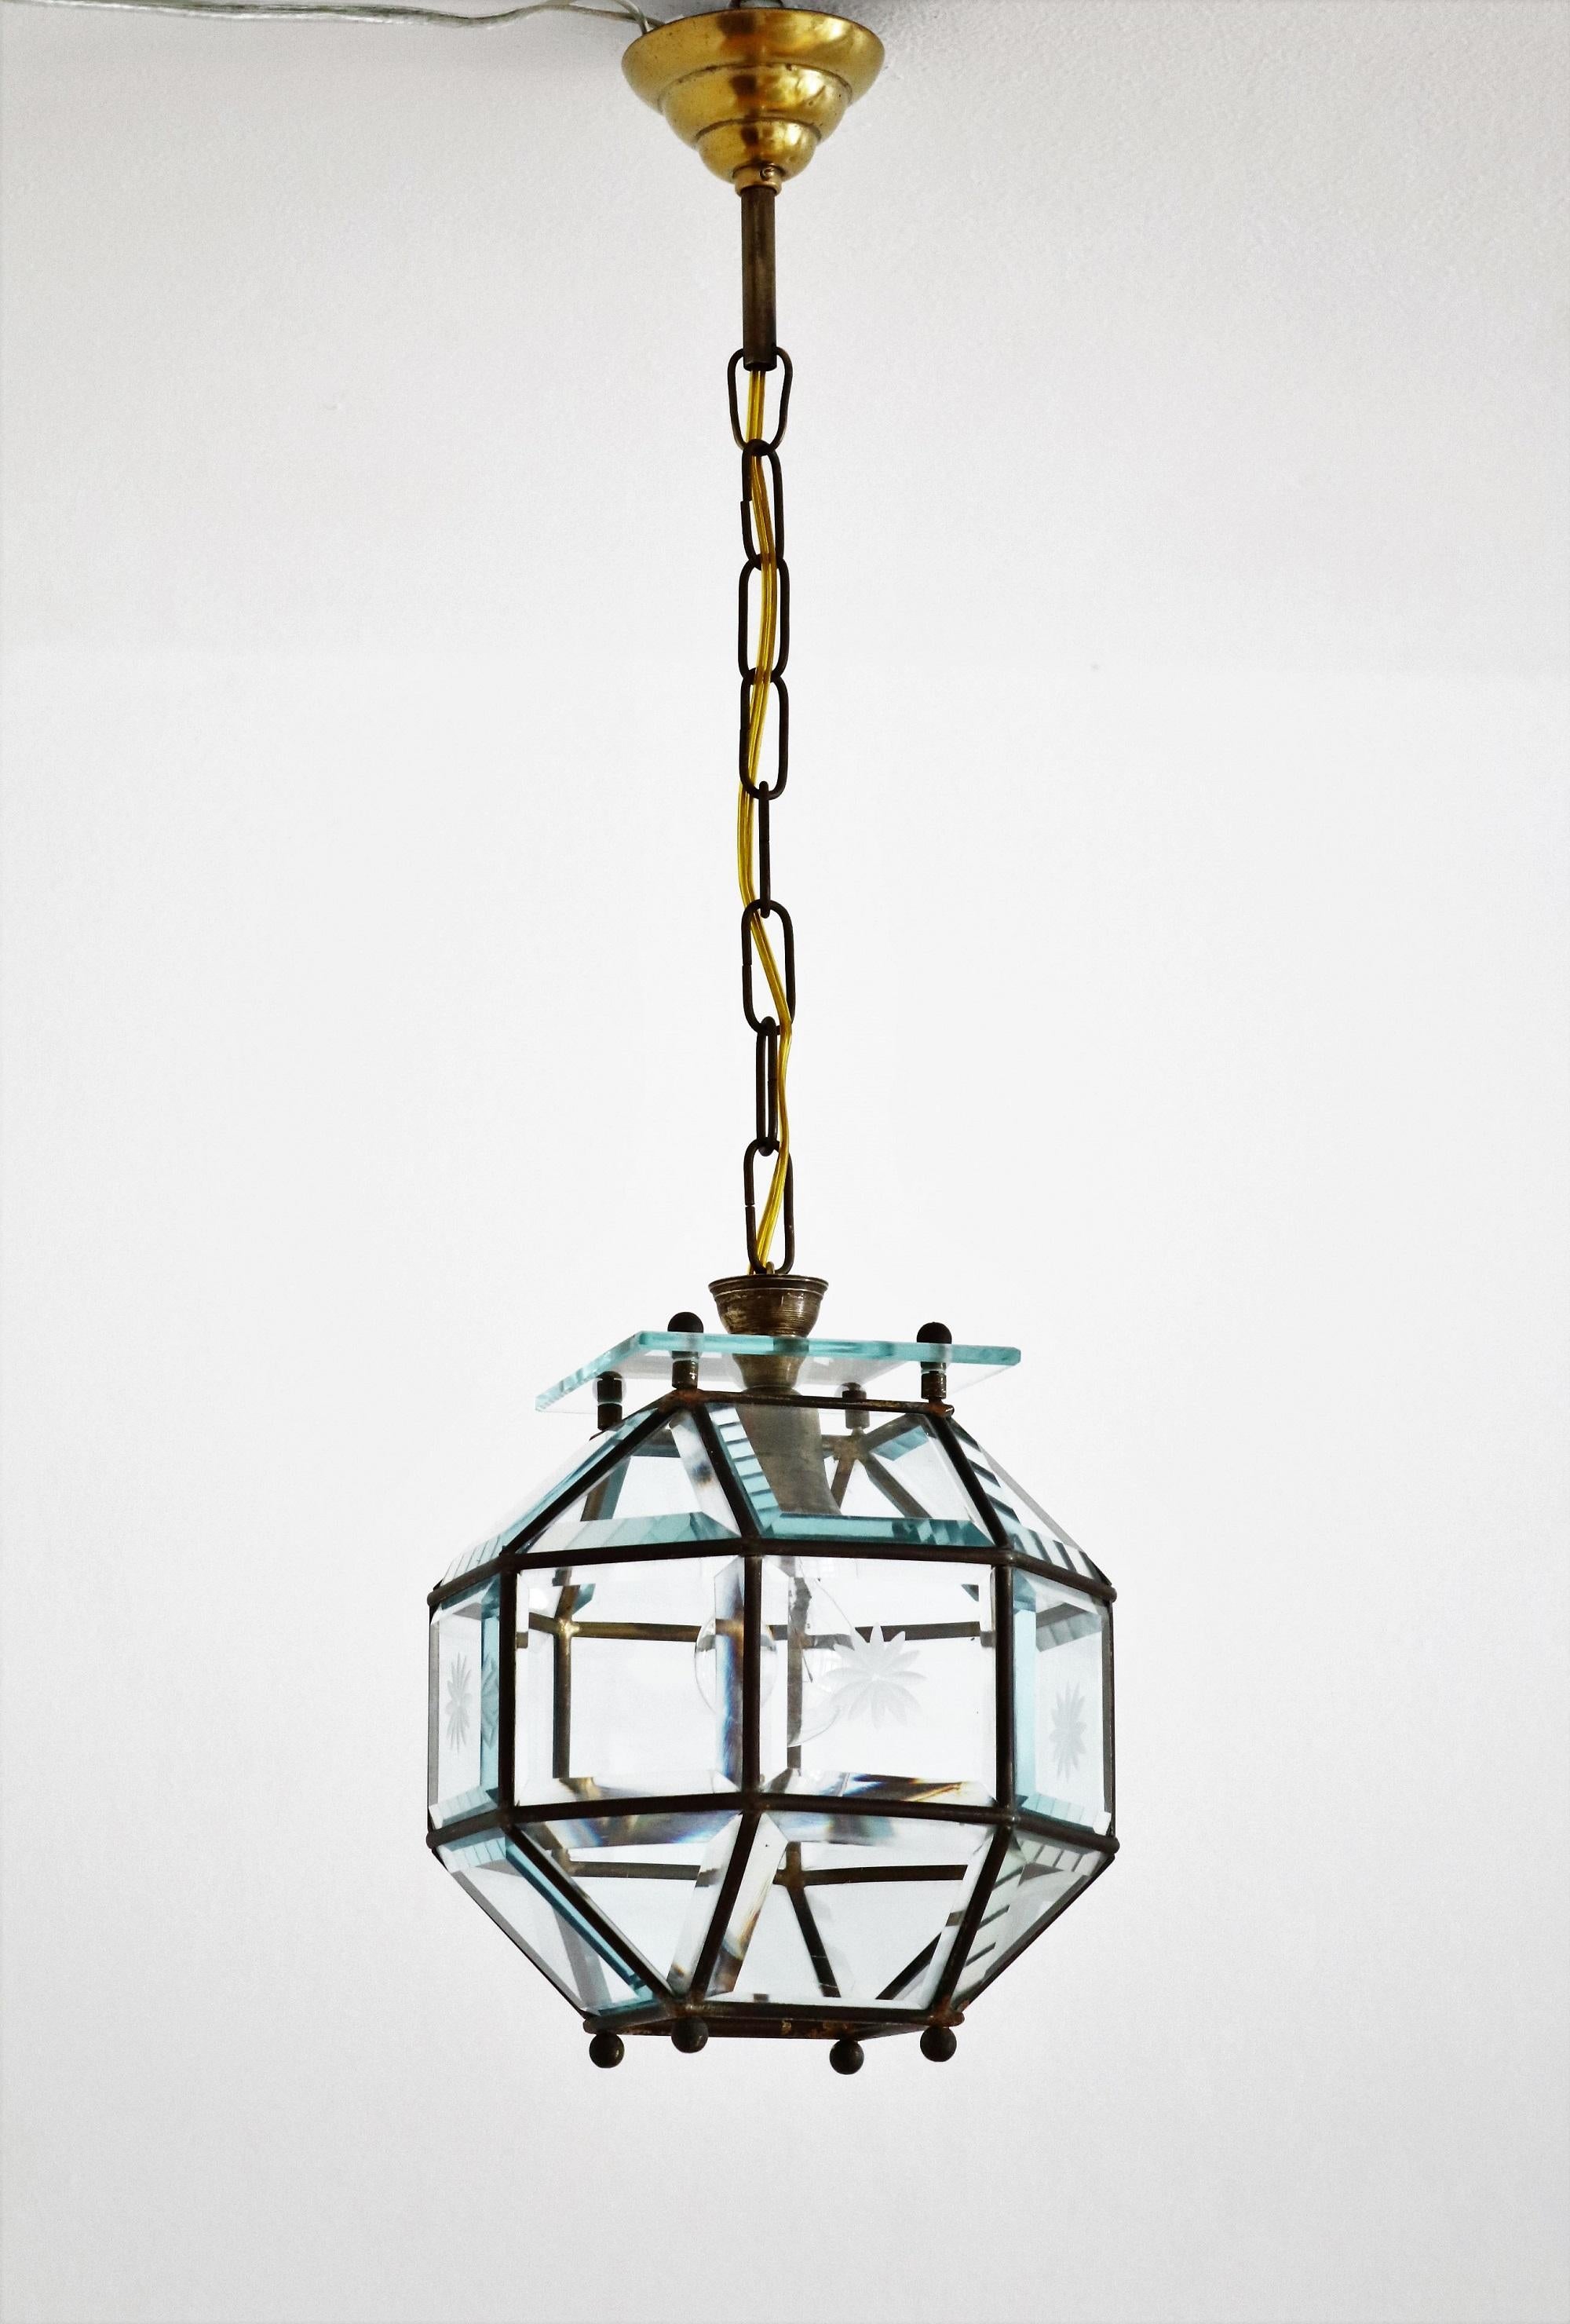 Italian Art Nouveau Secessionist Pendant Lamp in the Manner of Adolf Loos